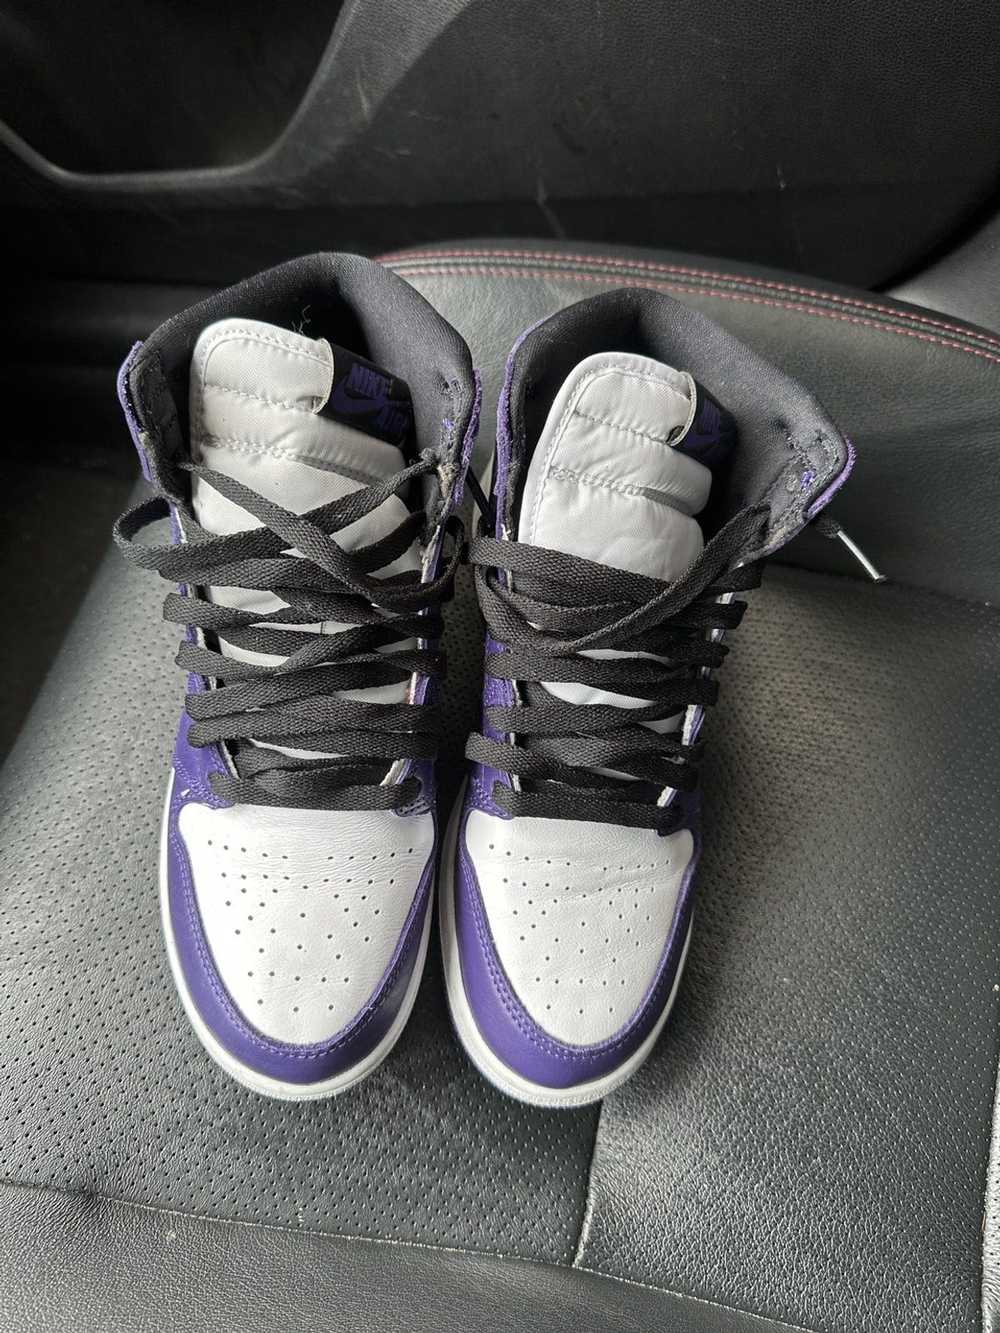 Jordan Brand Air Jordan 1 Hi OG “Court Purple 2.0” - image 3